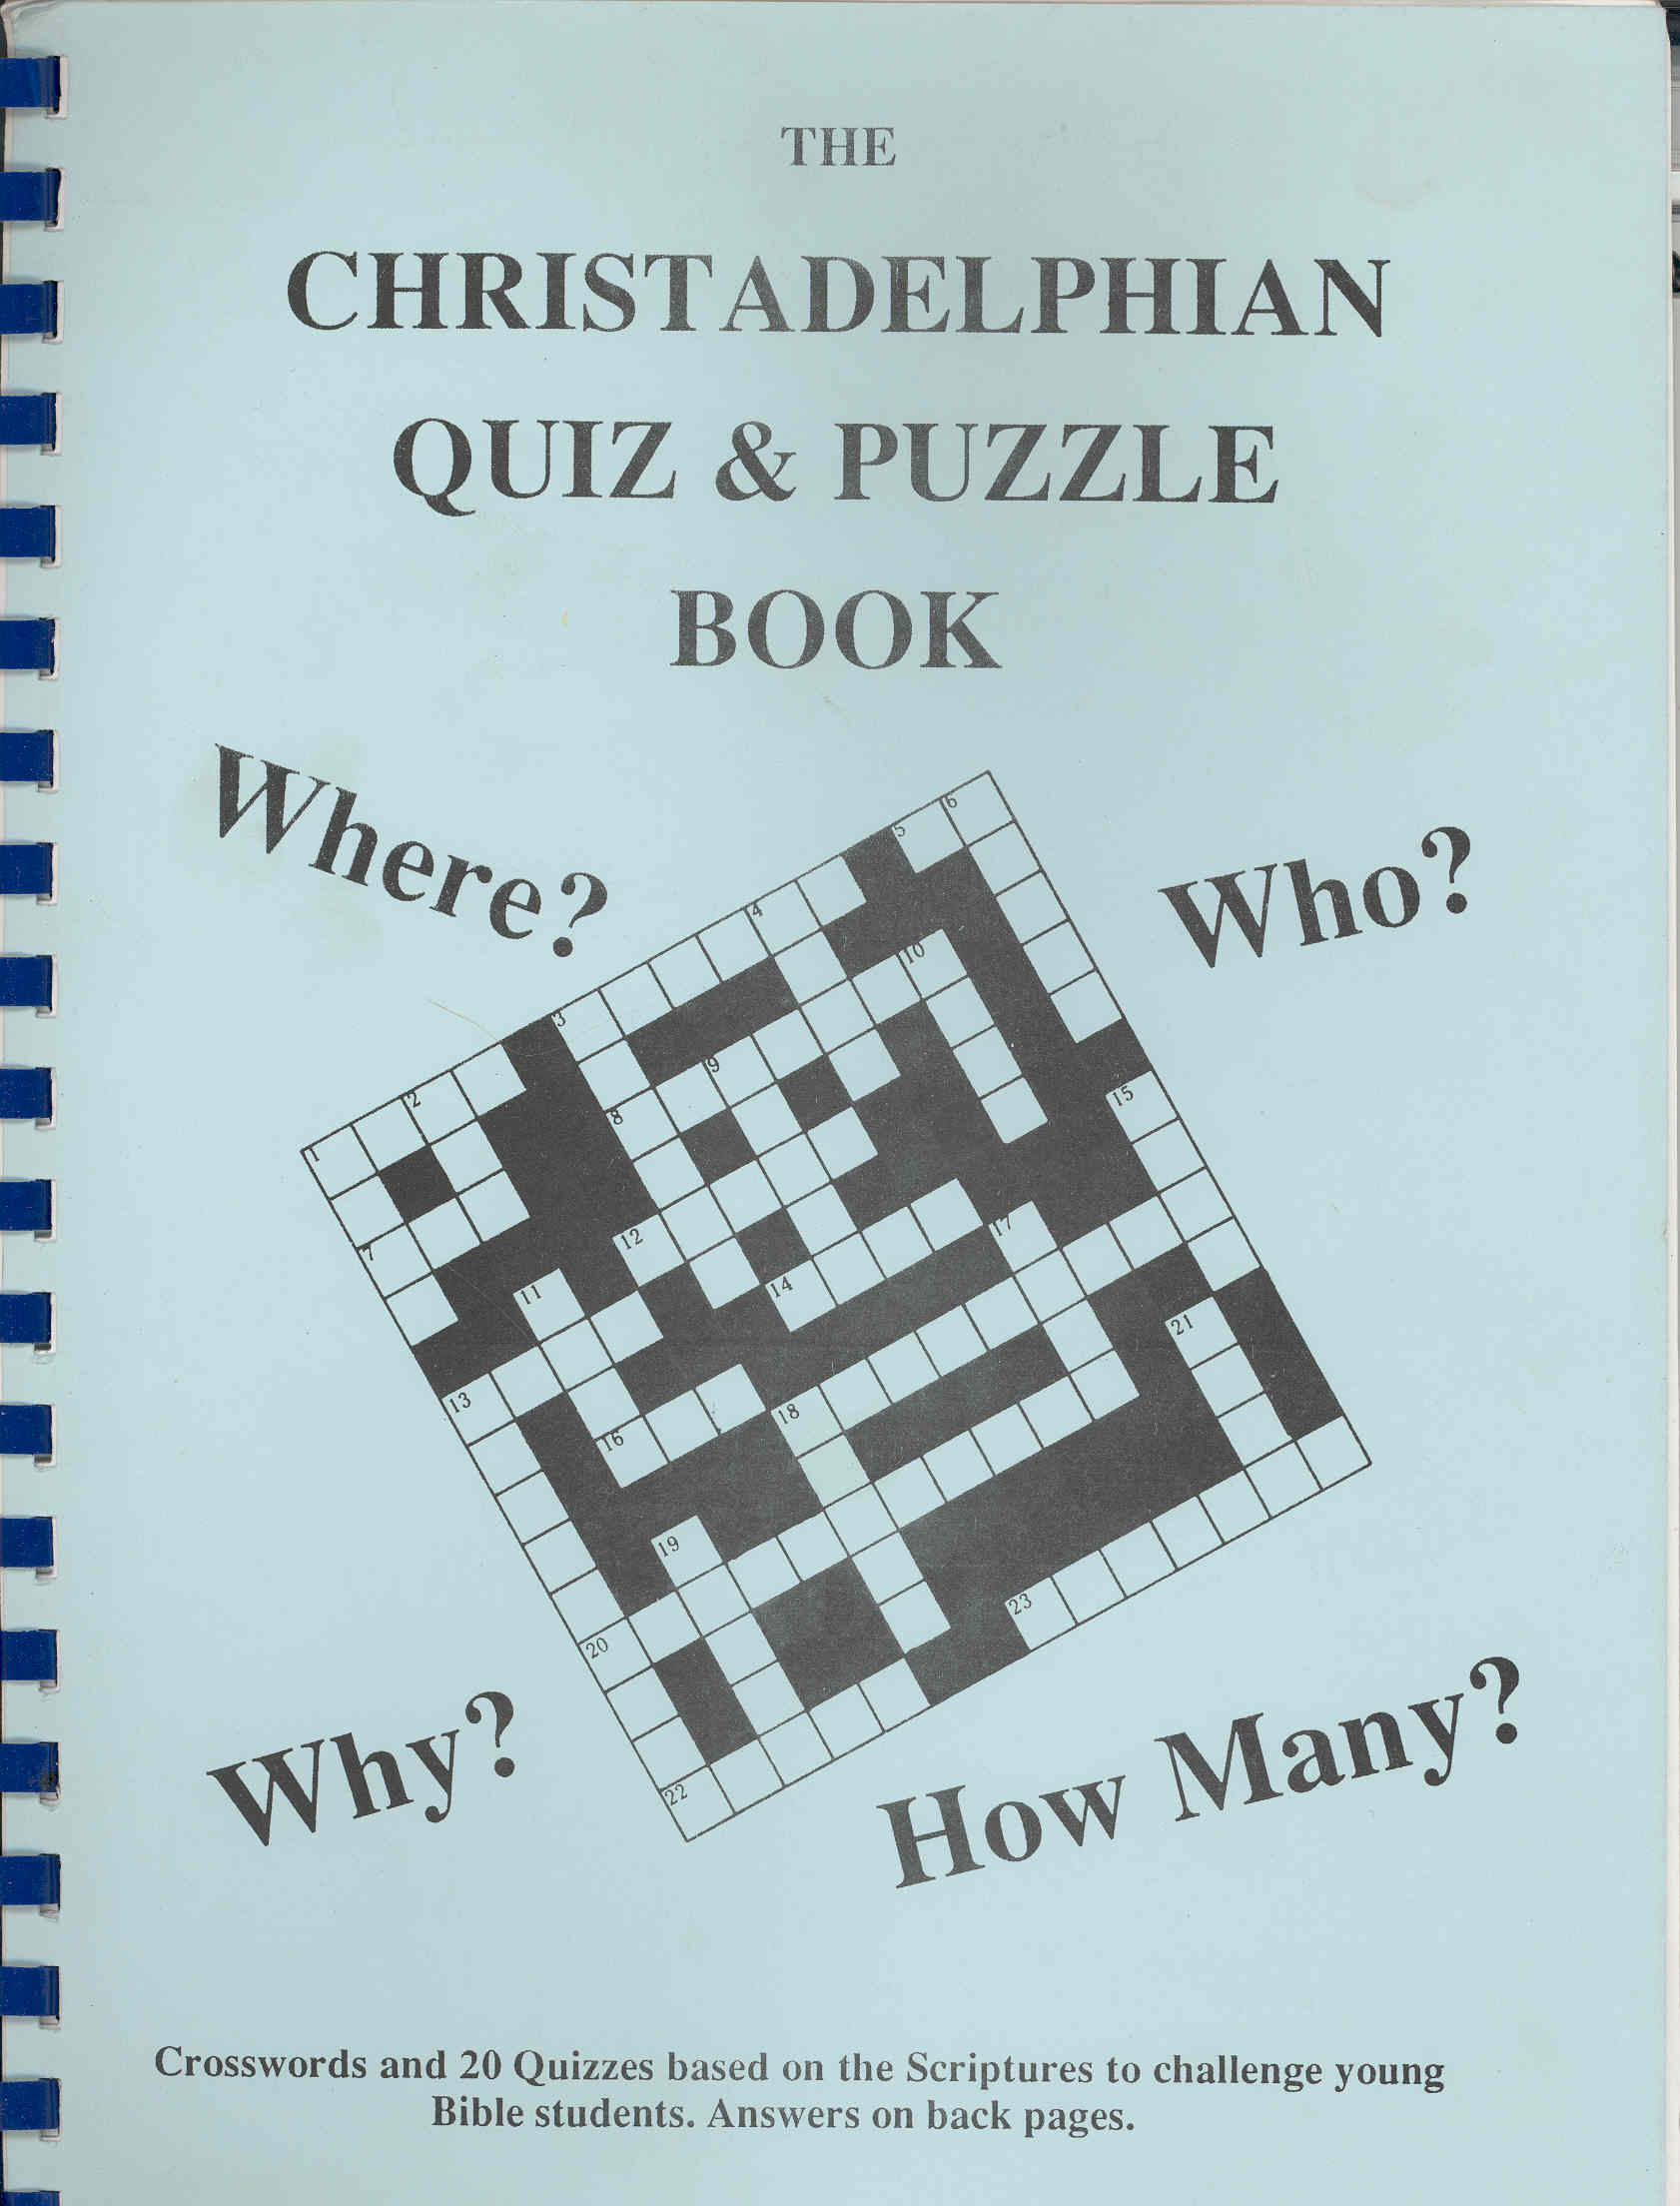 Christadelphian quiz and puzzle book, The